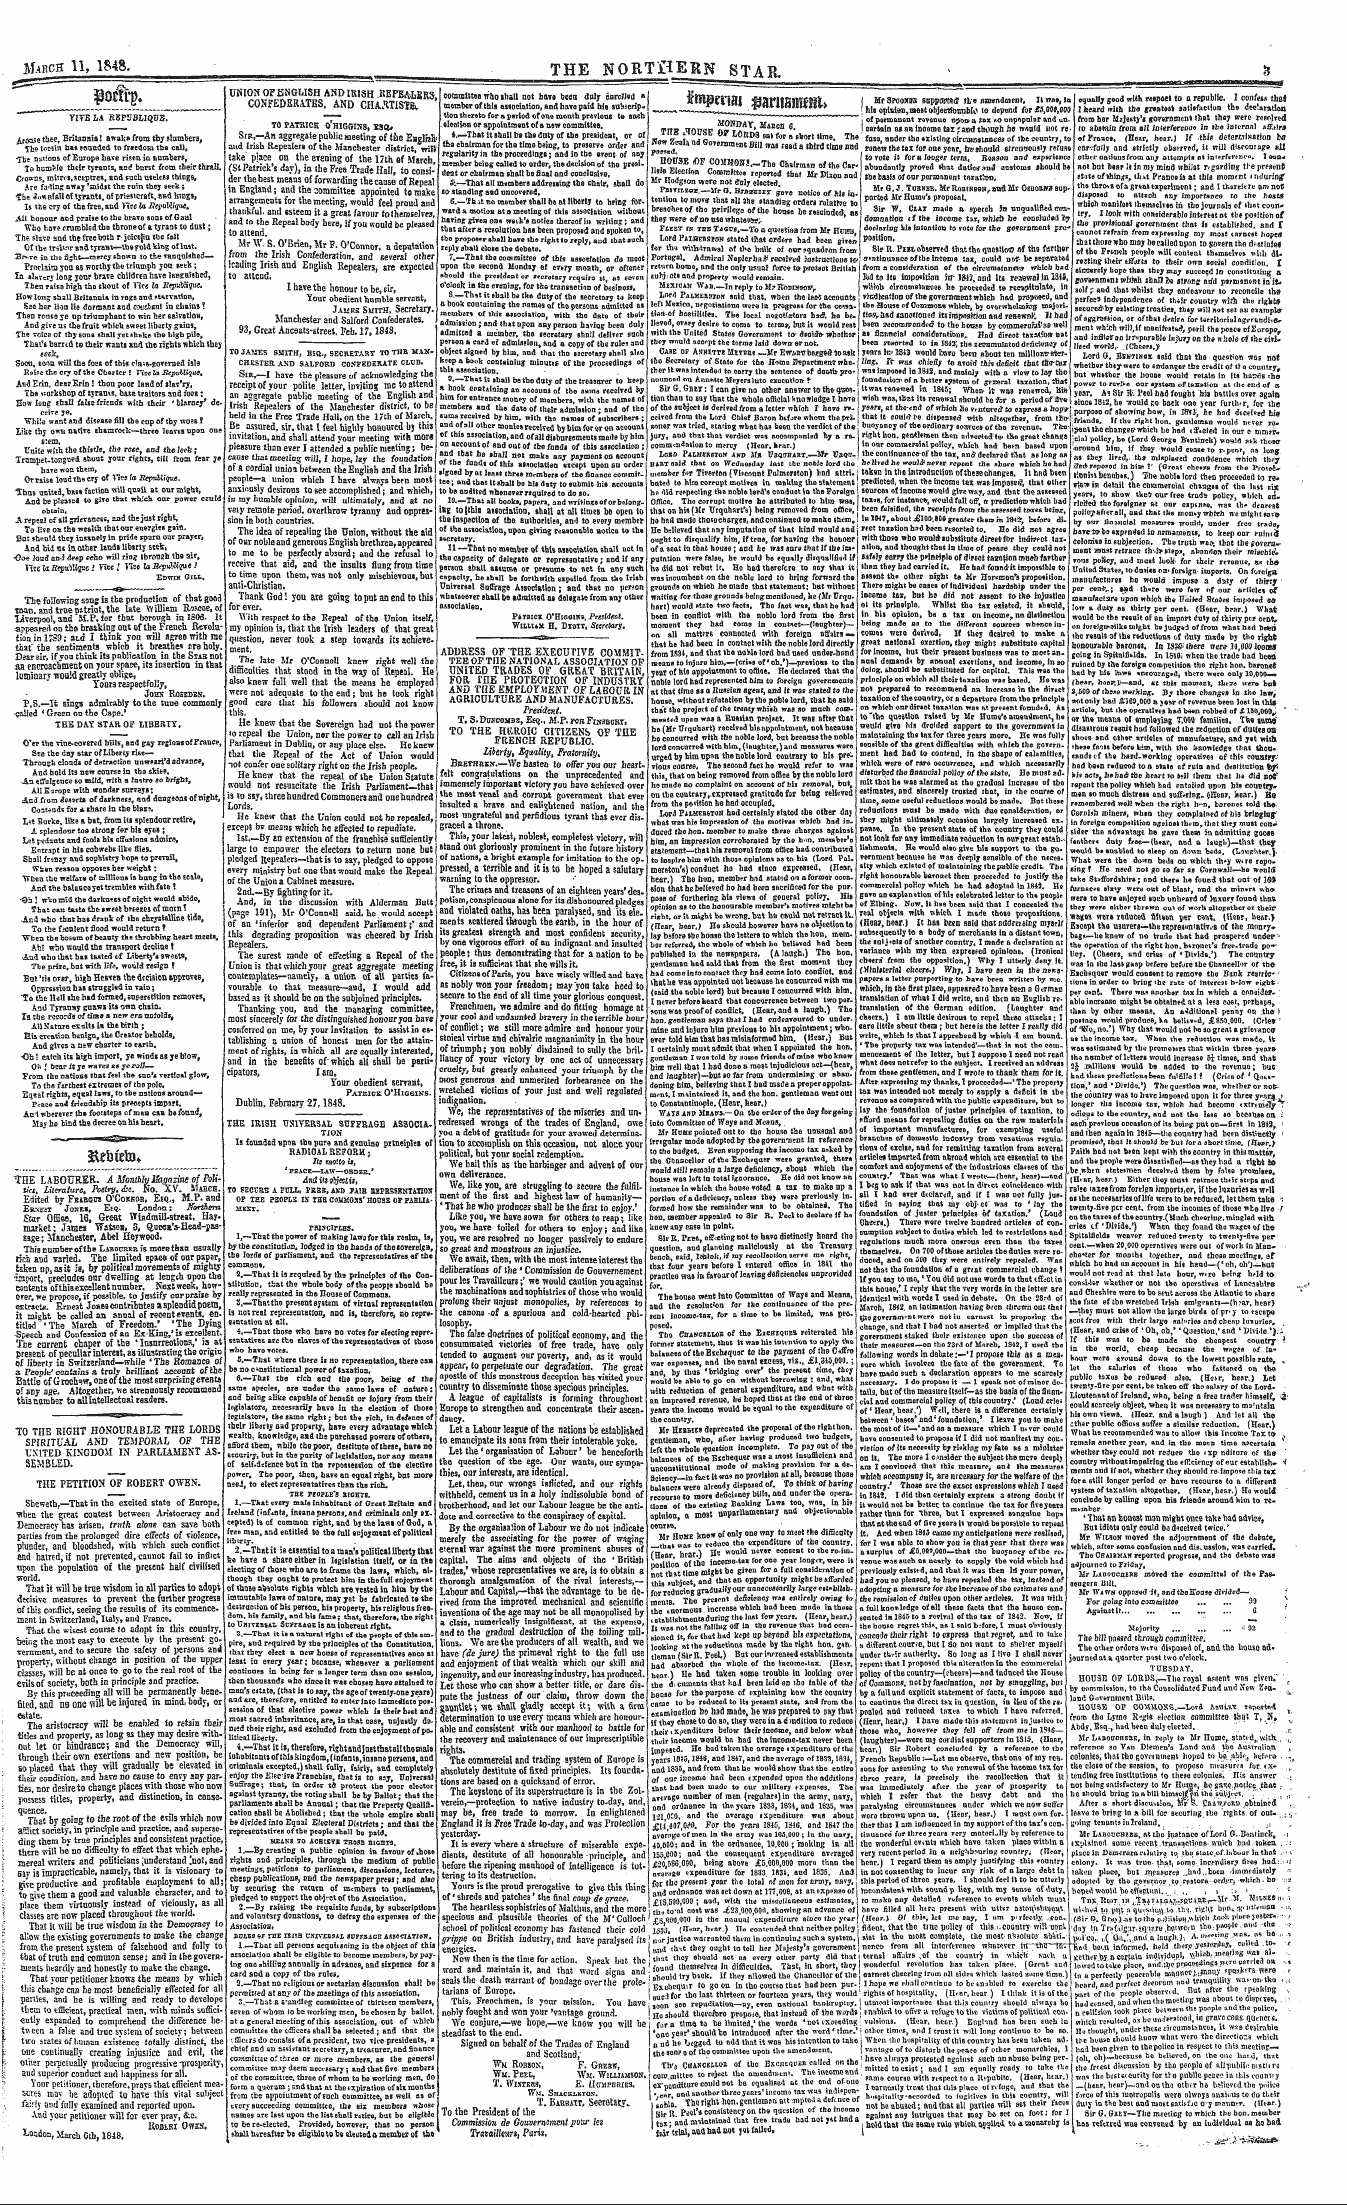 Northern Star (1837-1852): jS F Y, 2nd edition - The Irish Universal Suffrage Associa. Ti...